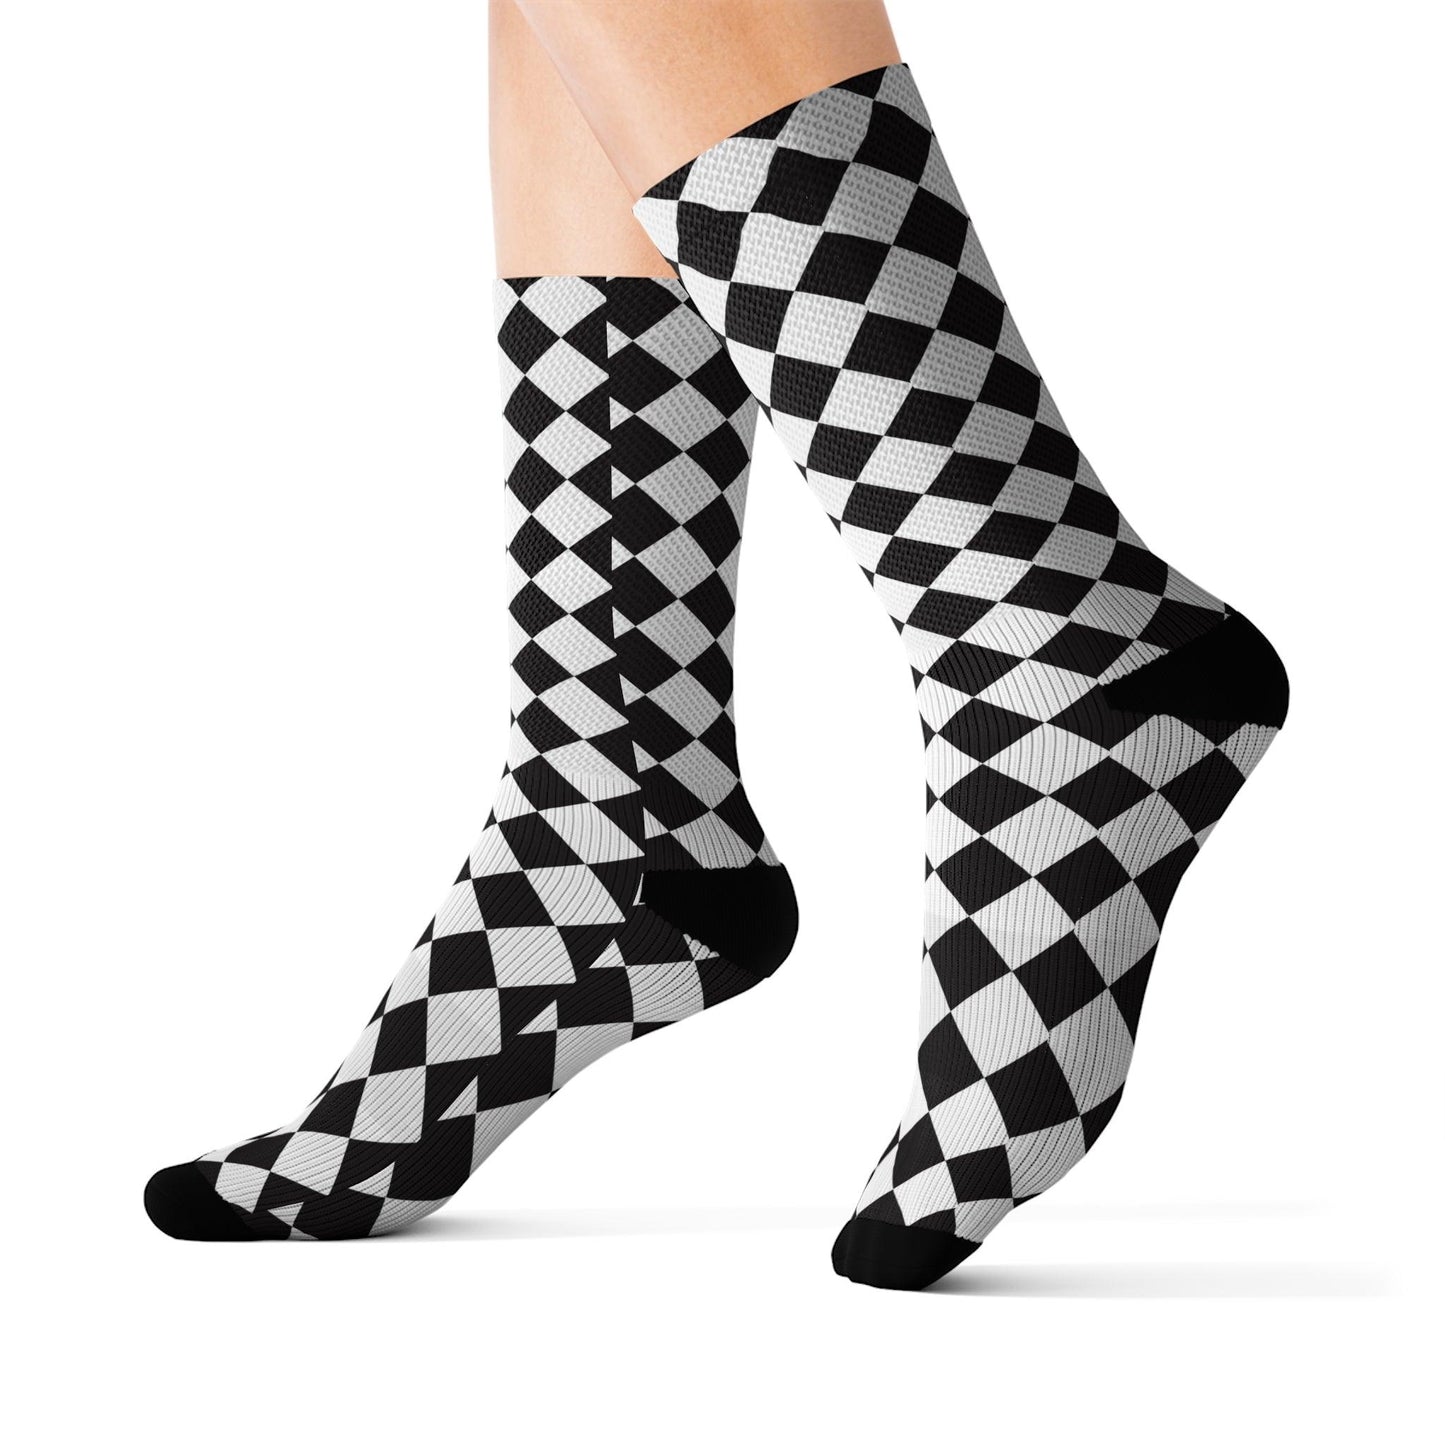 Socks-Checkmate - Premium  from Elementologie - Just $13.50! Shop now at Elementologie